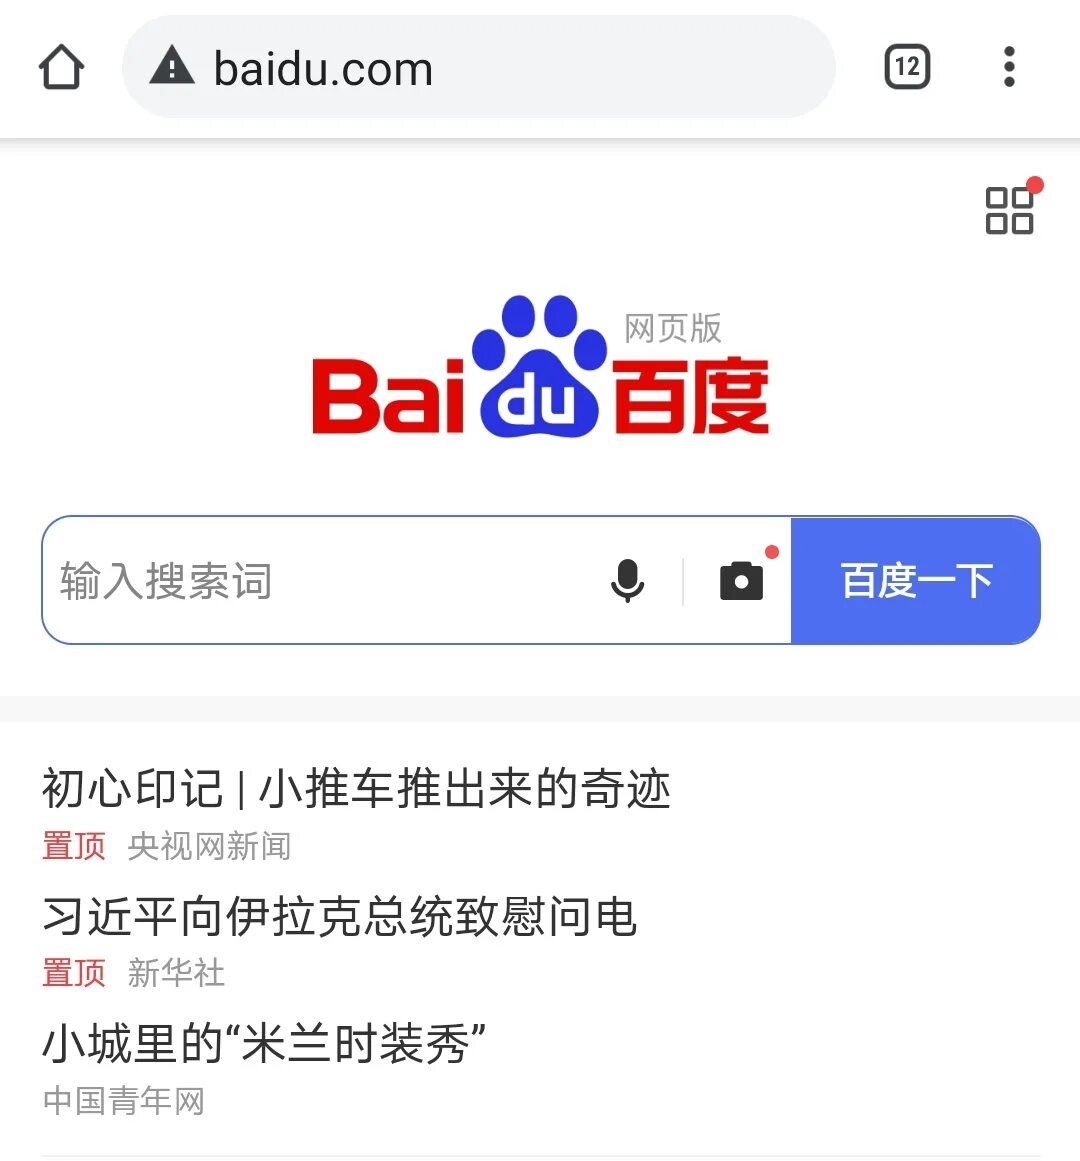 Baidu цена. Baidu Поисковик. Байду китайский Поисковик. Китайский браузер baidu. Китайский сайт baidu .com.